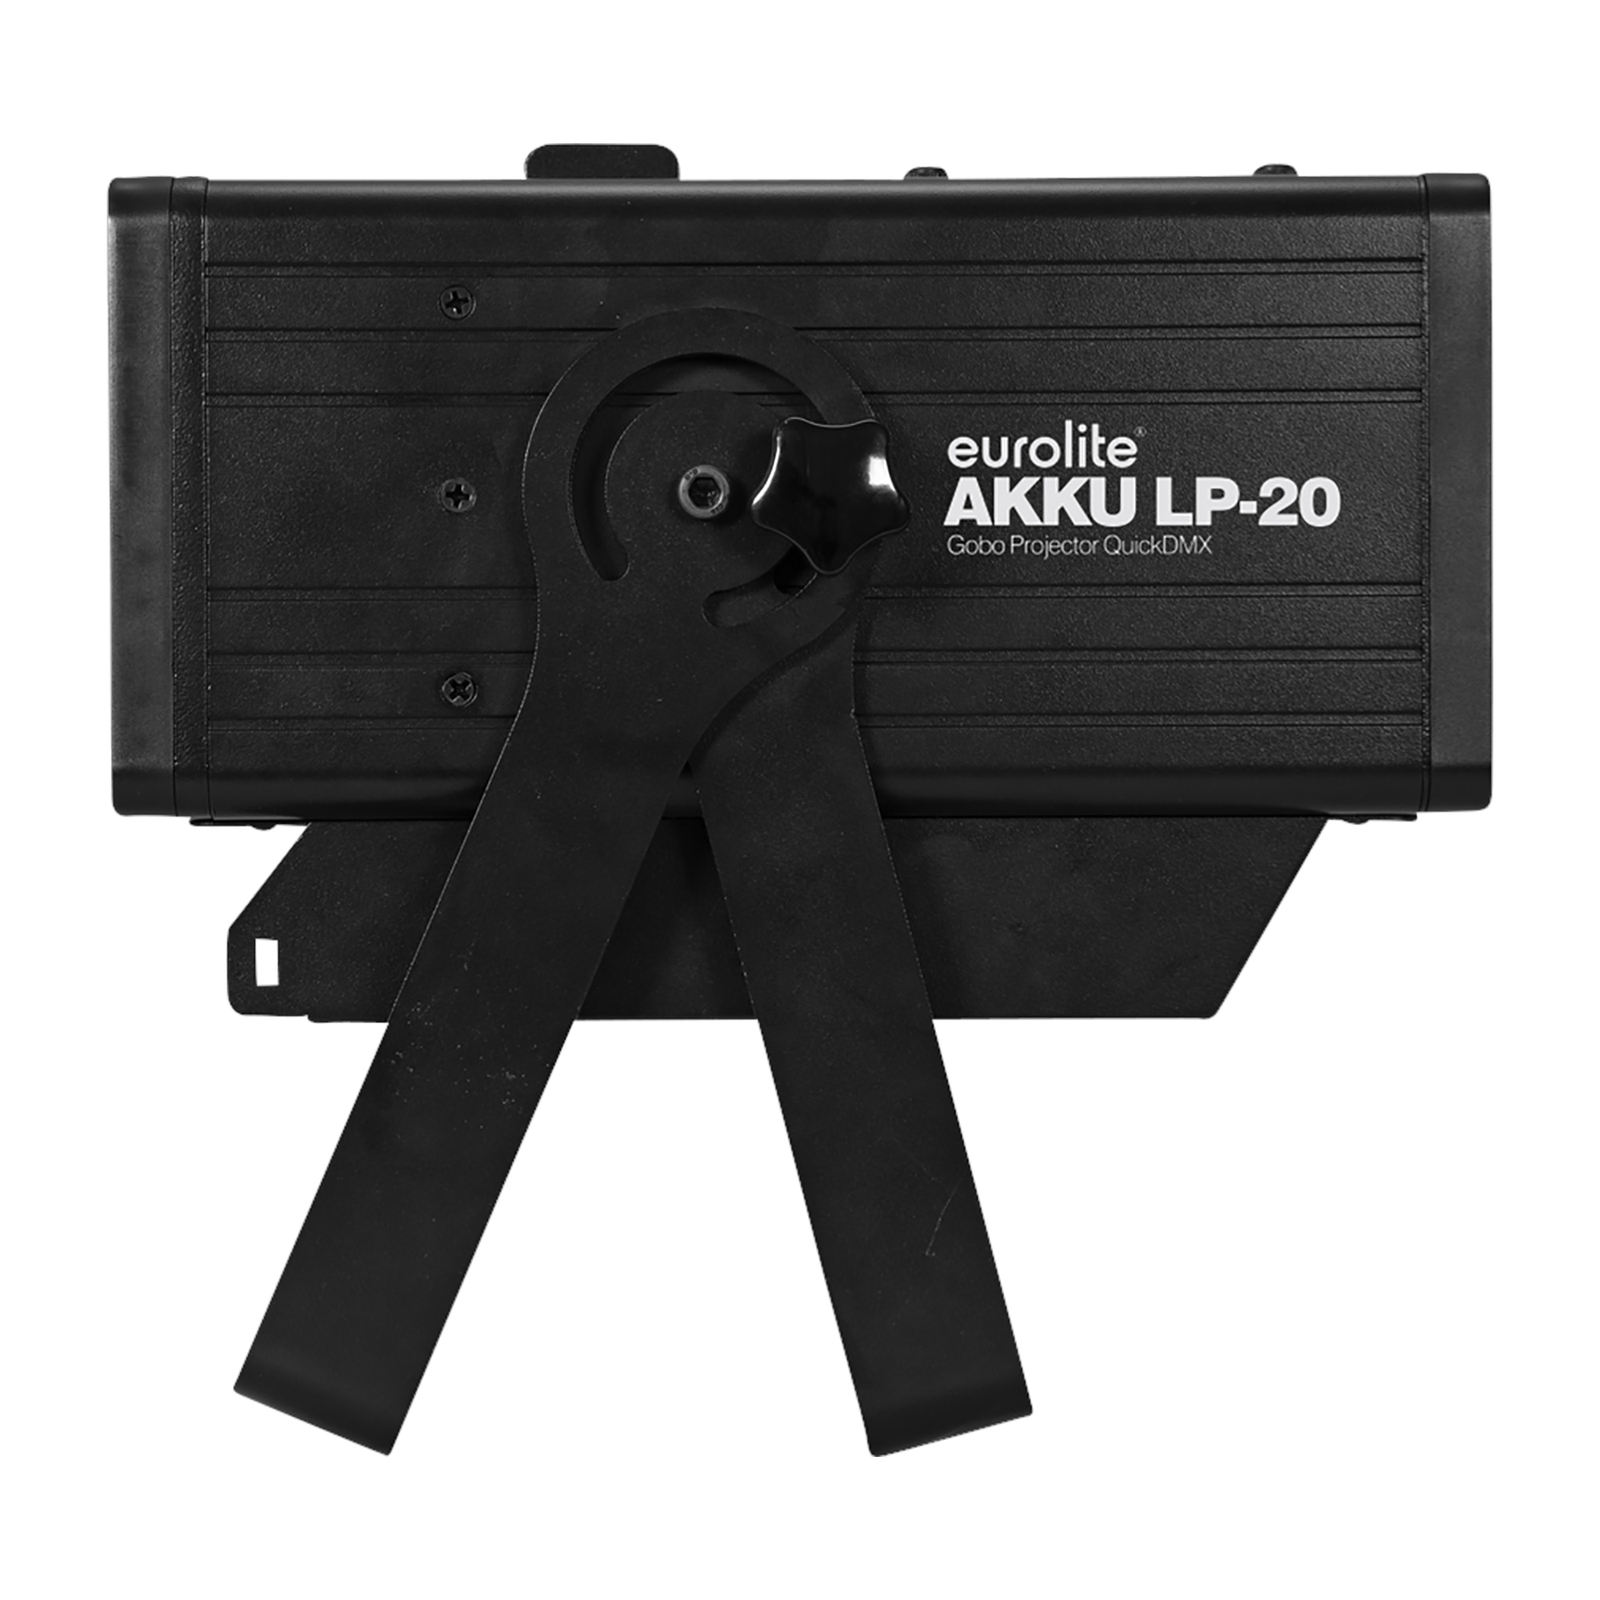 EUROLITE rechargeable battery LP-20 Gobo projector QuickDMX